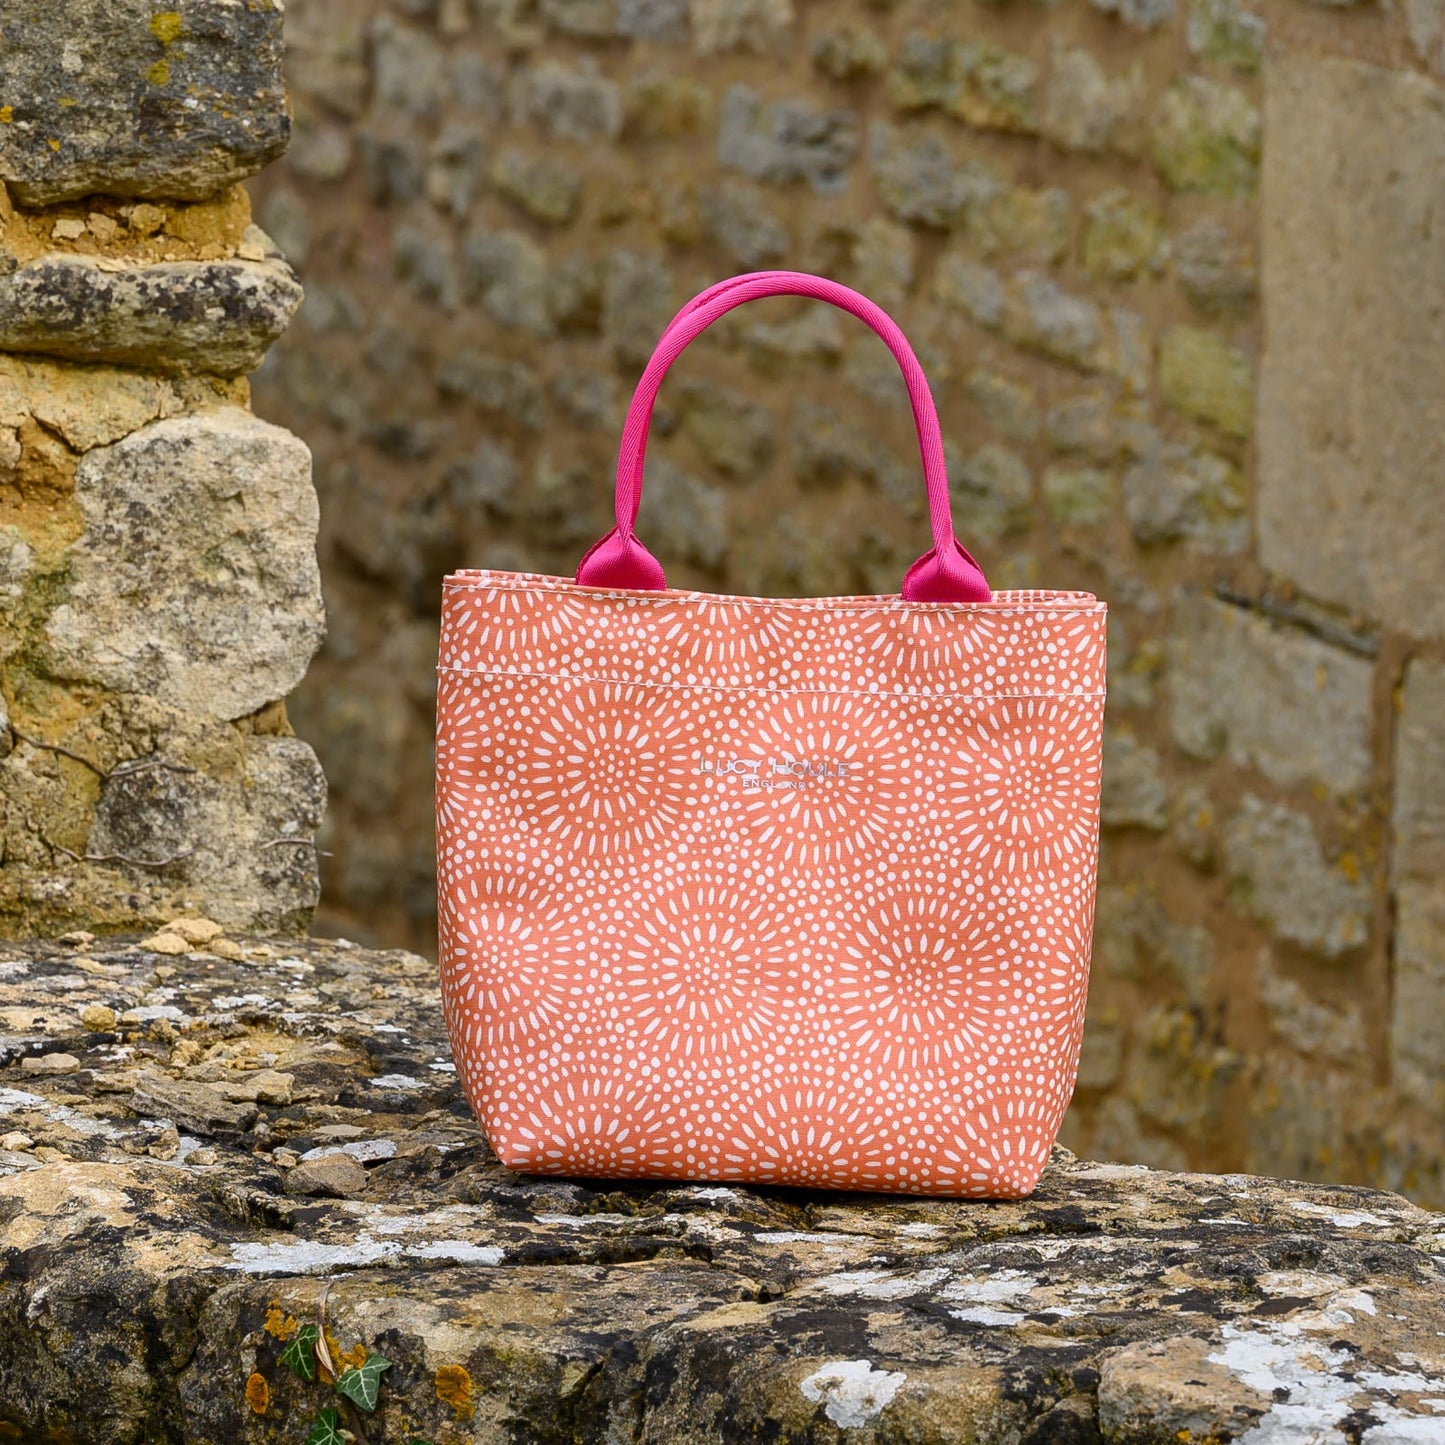 Amber Sunburst Mini Tote Bag with Pink Handles